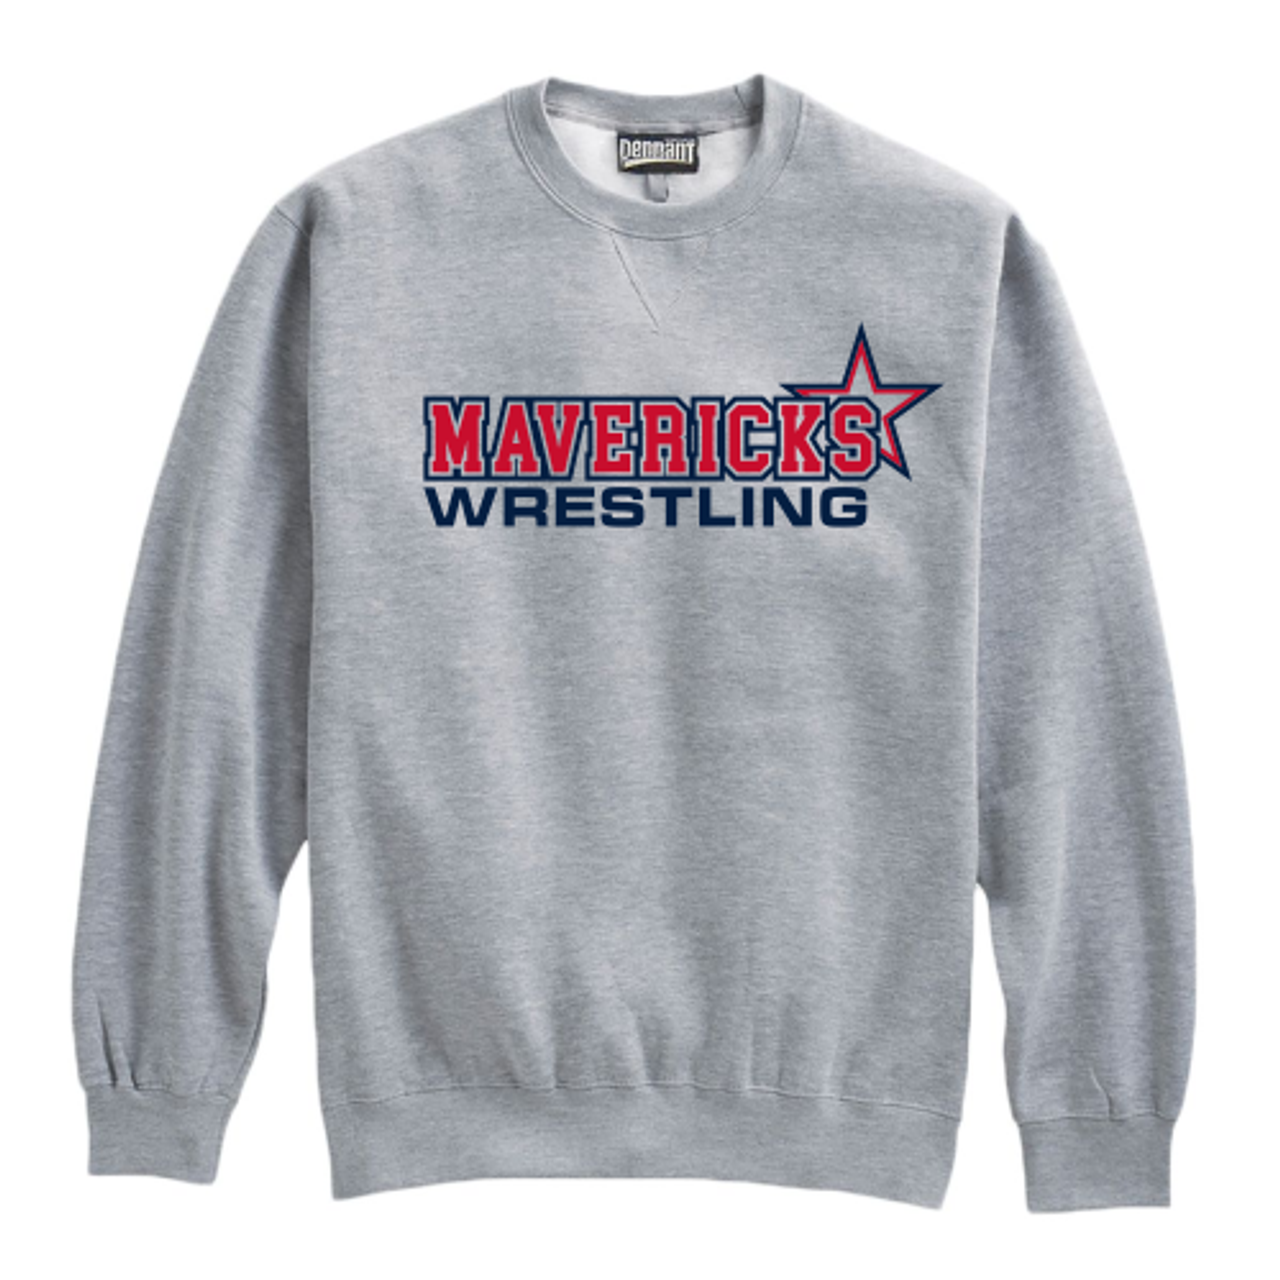 Mavericks Wrestling Crewneck Sweatshirt, Gray